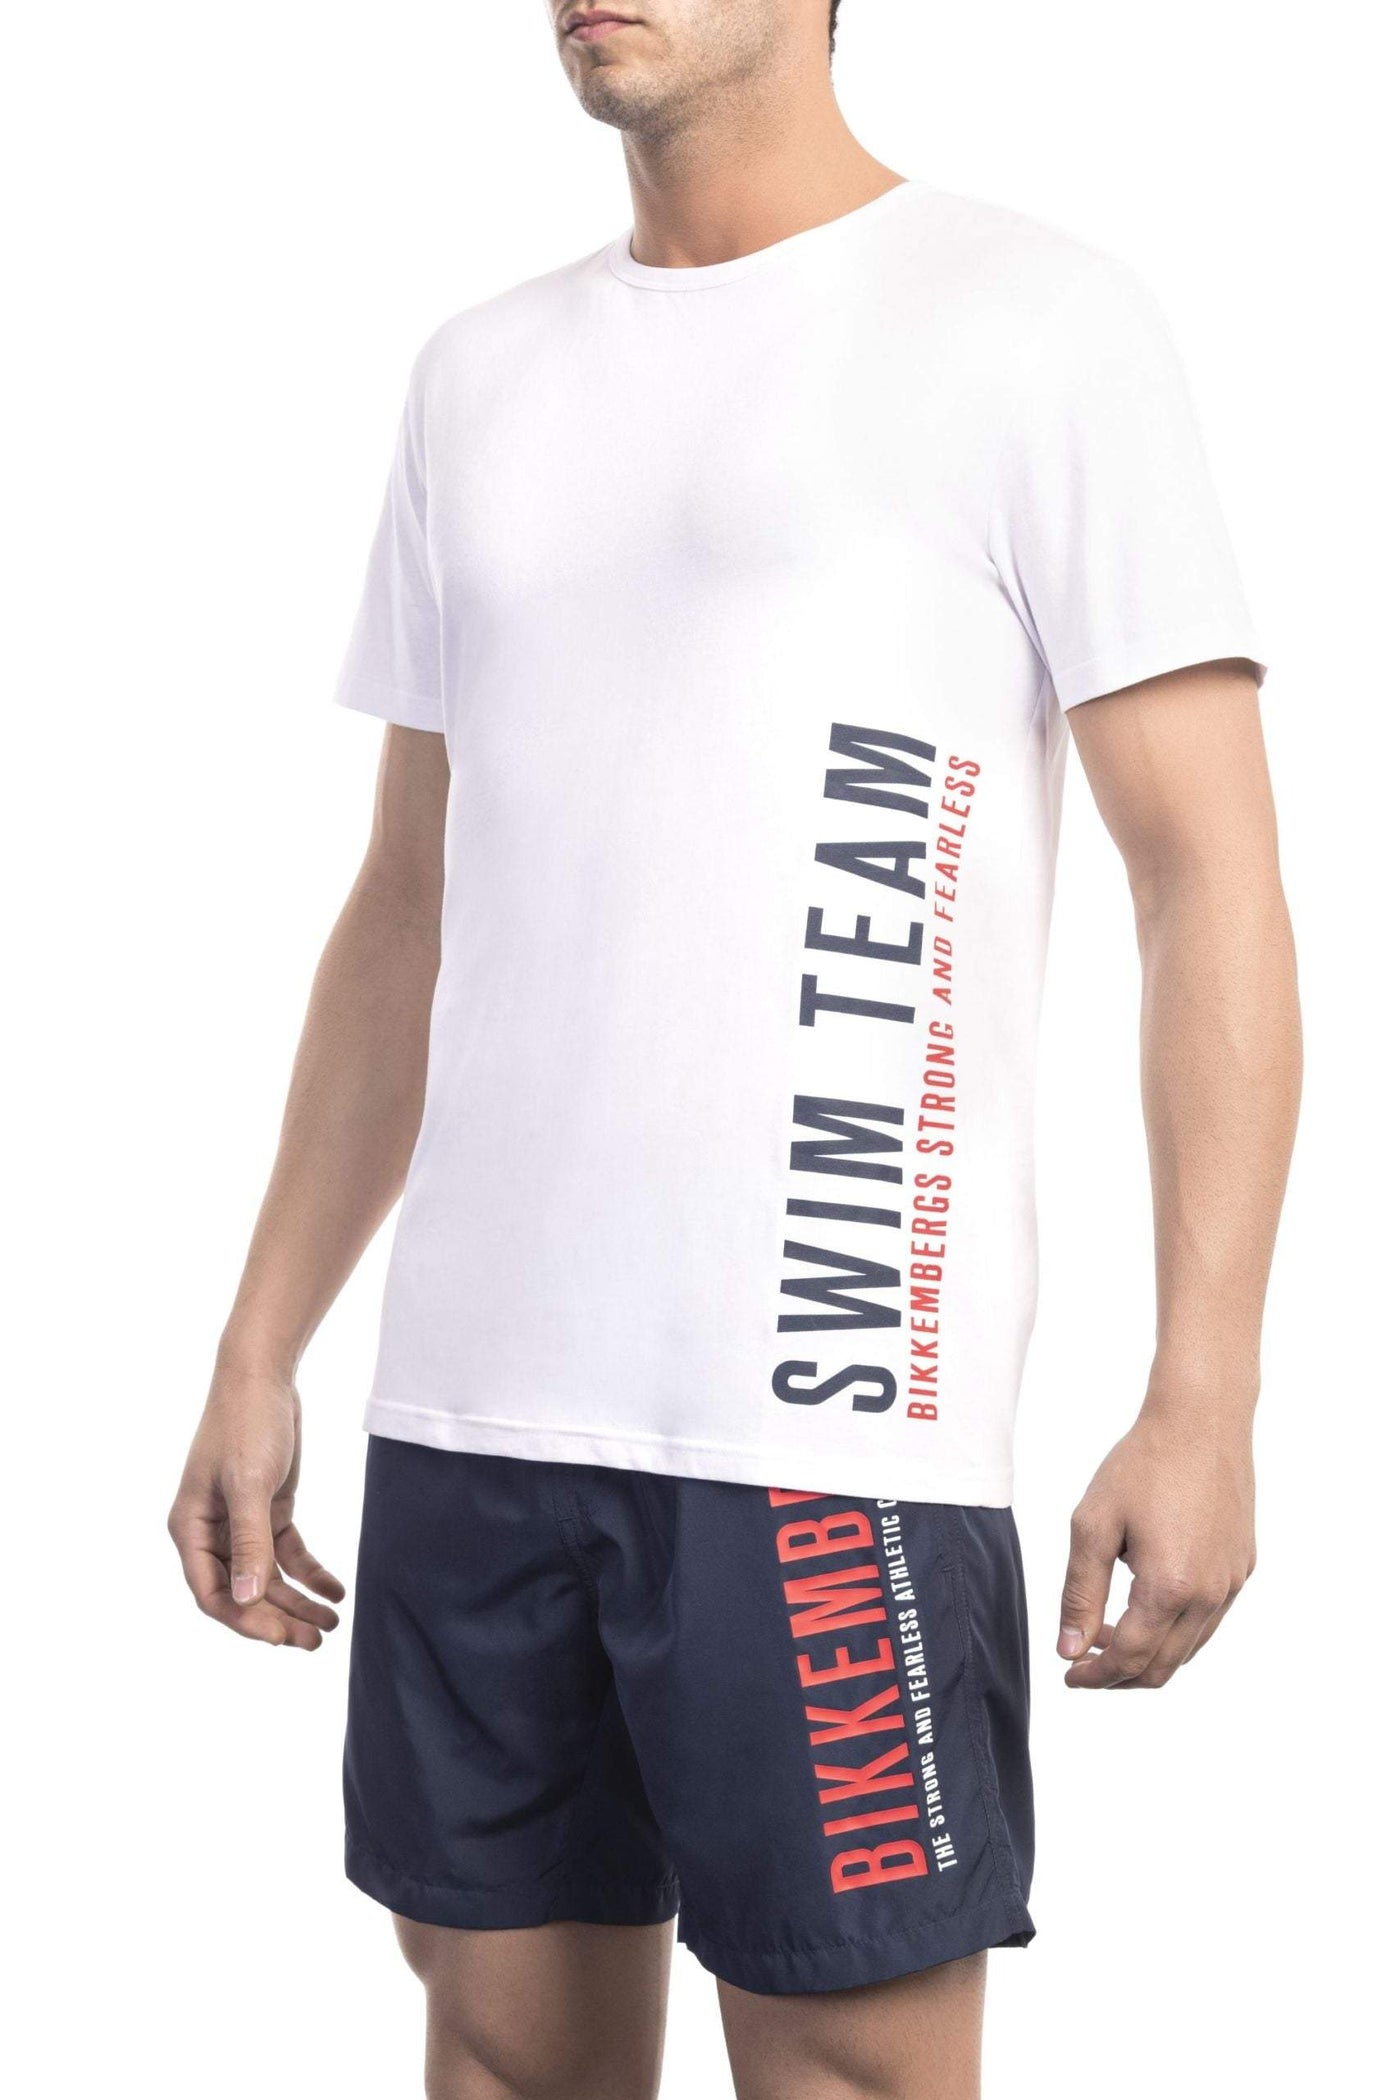 Bikkembergs White Cotton T-Shirt #men, Bikkembergs, feed-1, L, M, S, T-Shirts - Men - Clothing, White, XL, XXL at SEYMAYKA